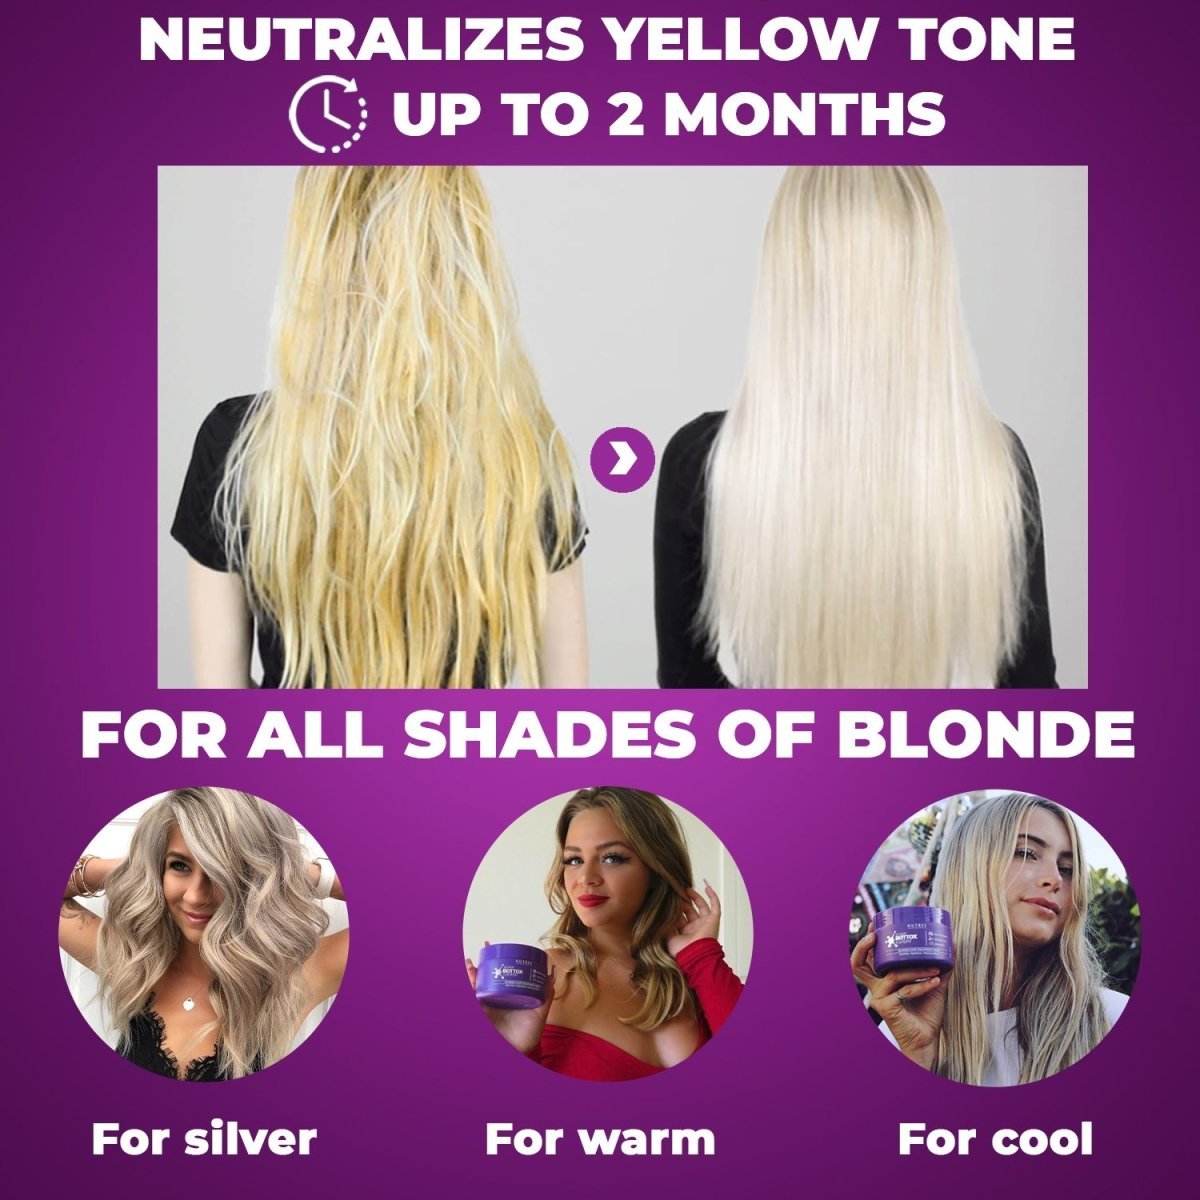 Blonde Hair Bottox Expert Purple Toning Mask 33.8 fl.oz / 1 kg - HAB 